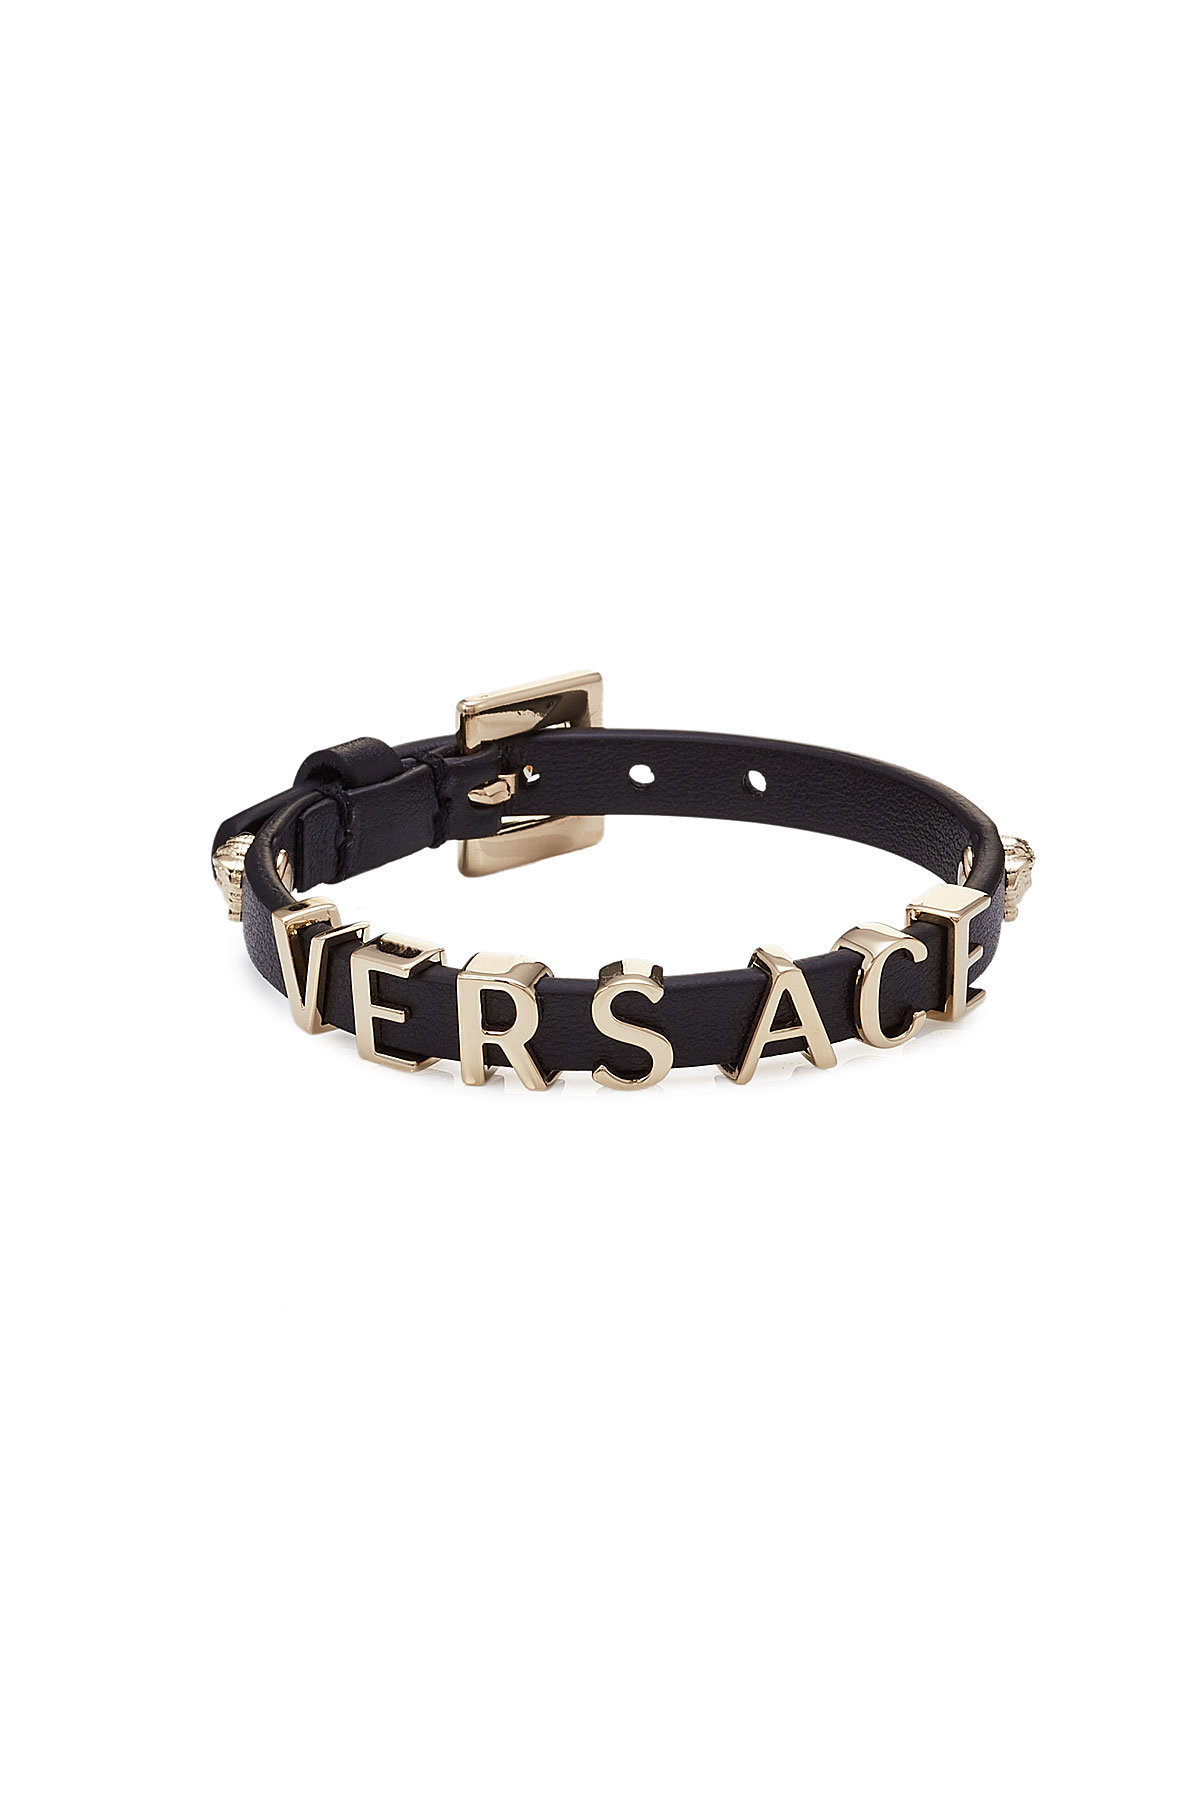 Versace - Leather Bracelet